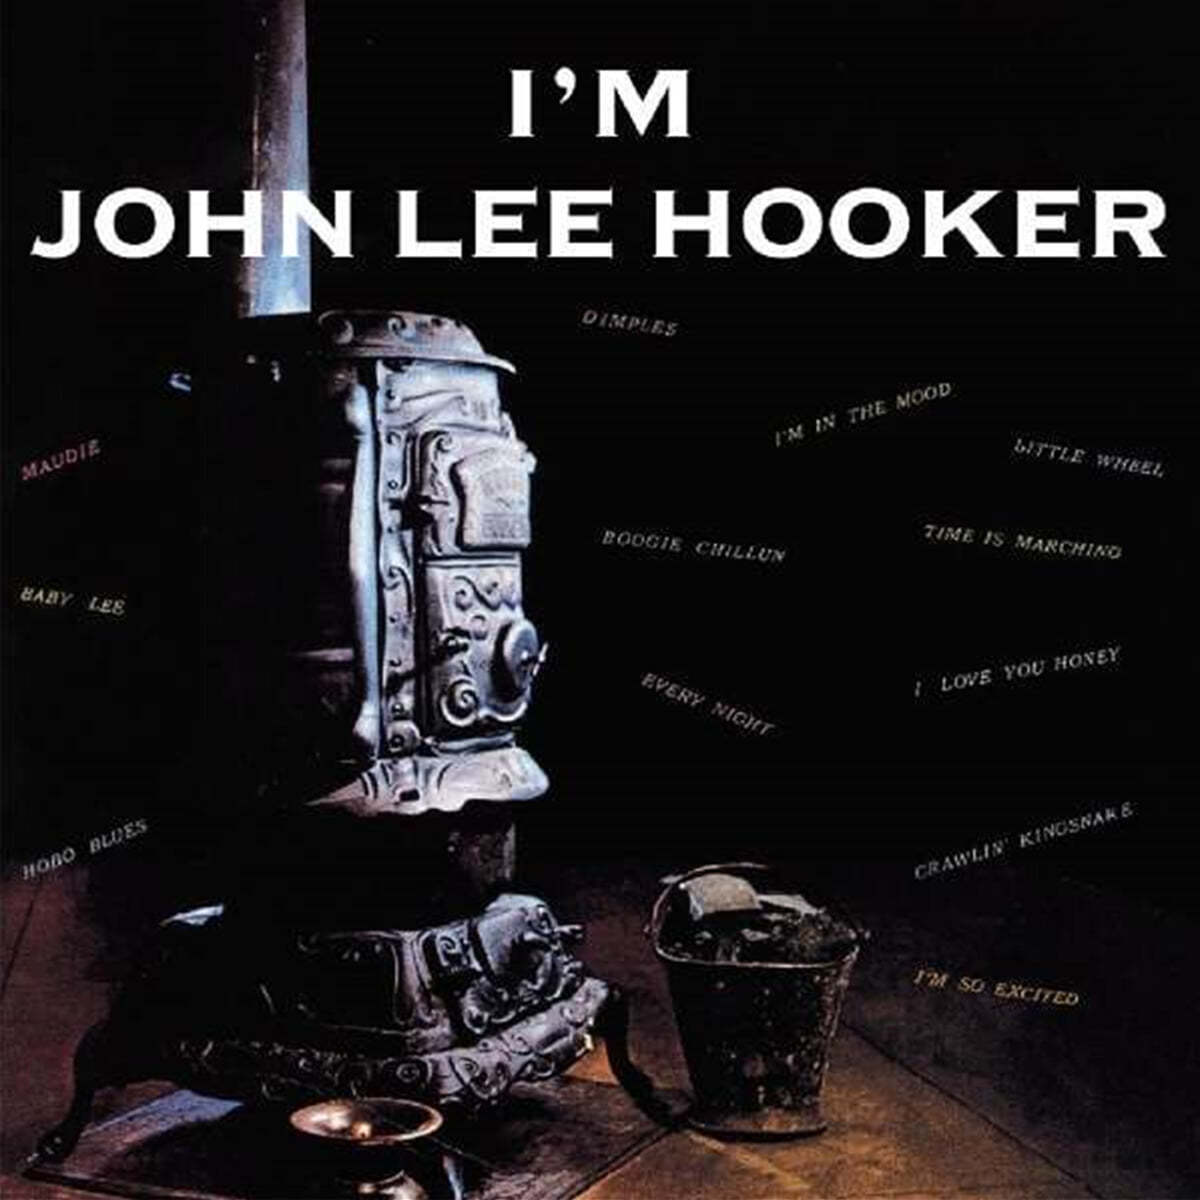 John Lee Hooker (존 리 후커) - I'm John Lee Hooker